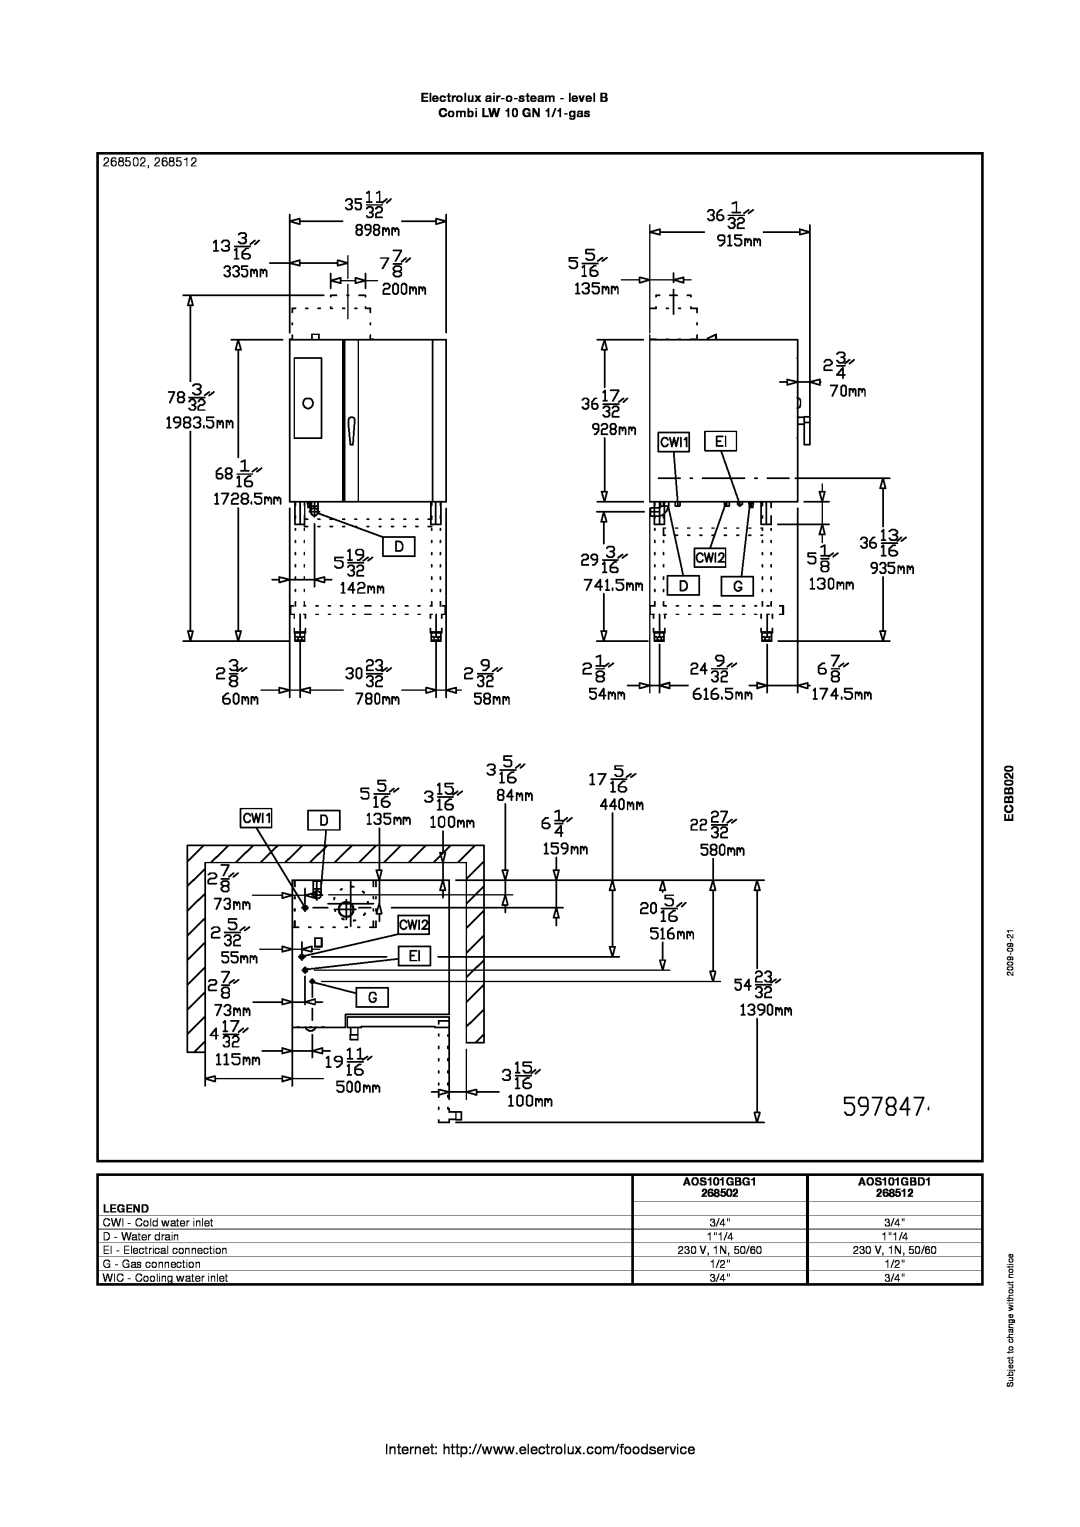 Electrolux 268502 manual Electrolux air-o-steam - level B Combi LW 10 GN 1/1-gas, ECBB020, AOS101GBG1, AOS101GBD1, 268512 